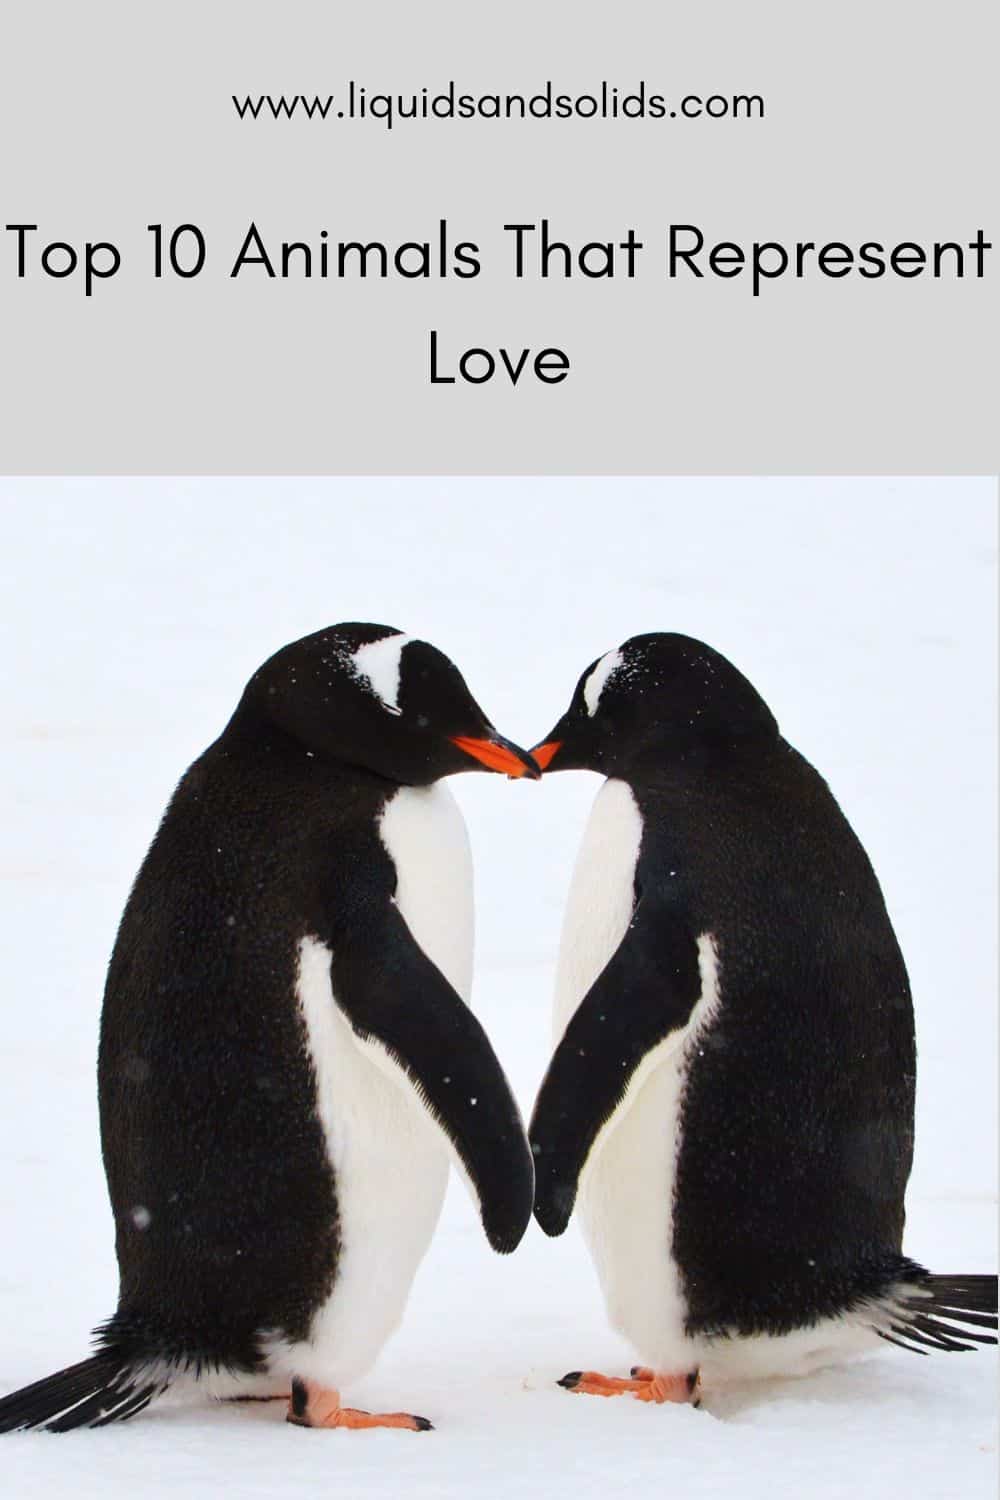 Animals That Represent Love - The Top Ten